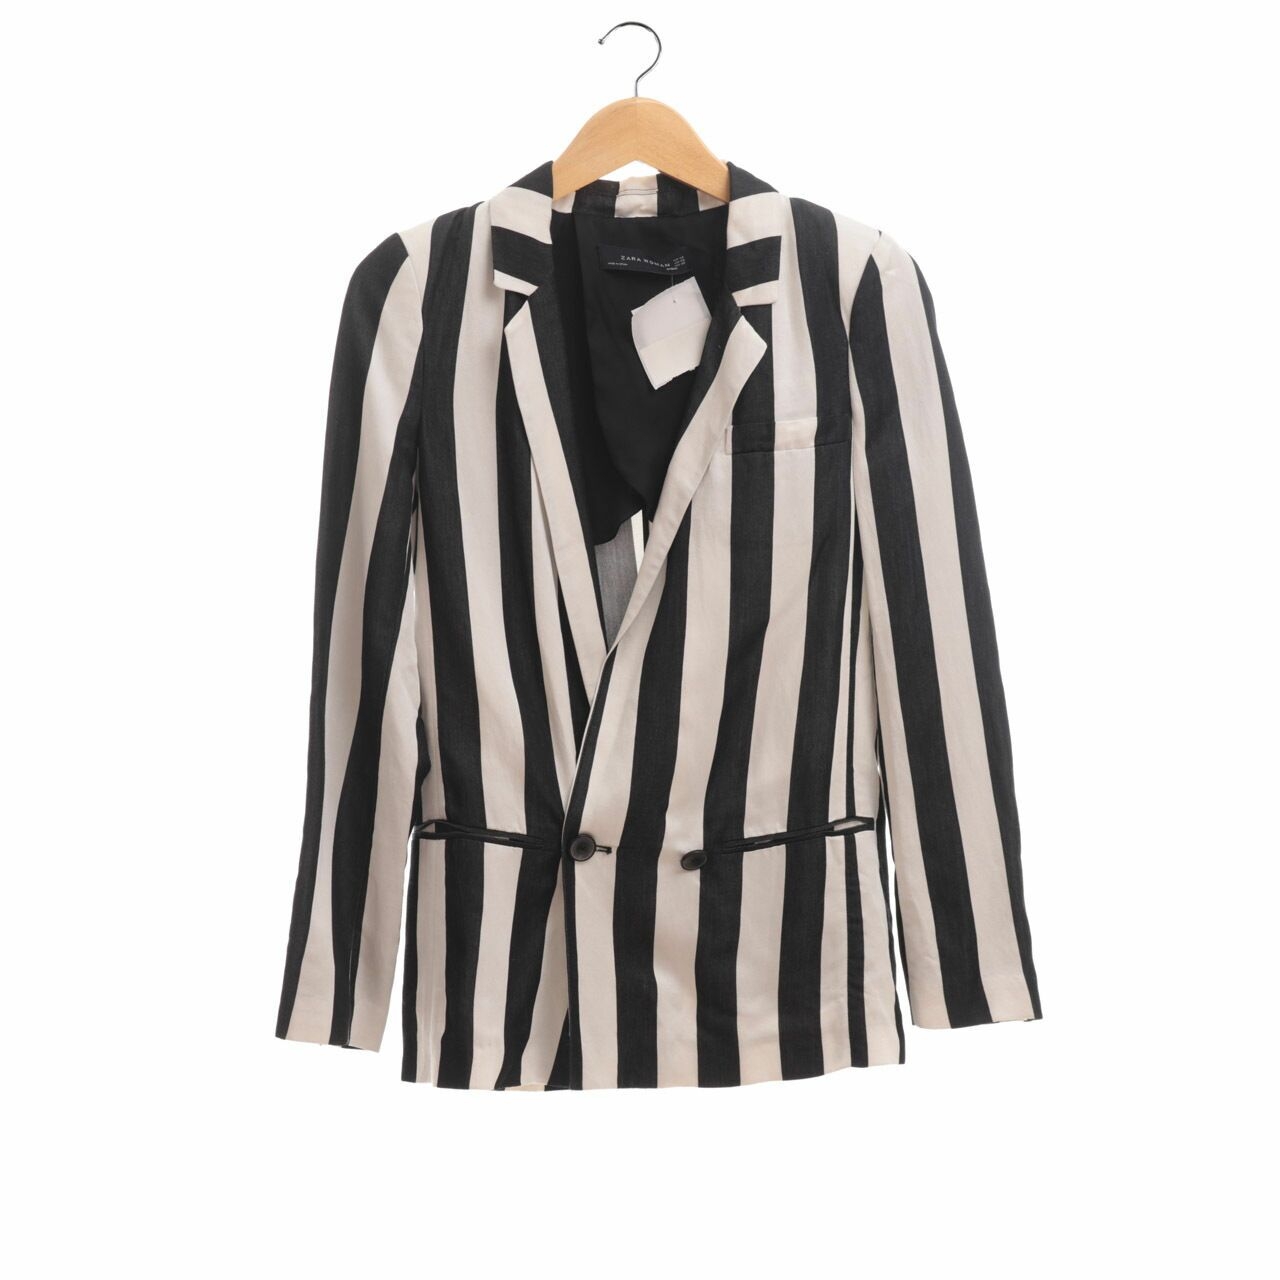 Zara Black & White Stripes Blazer